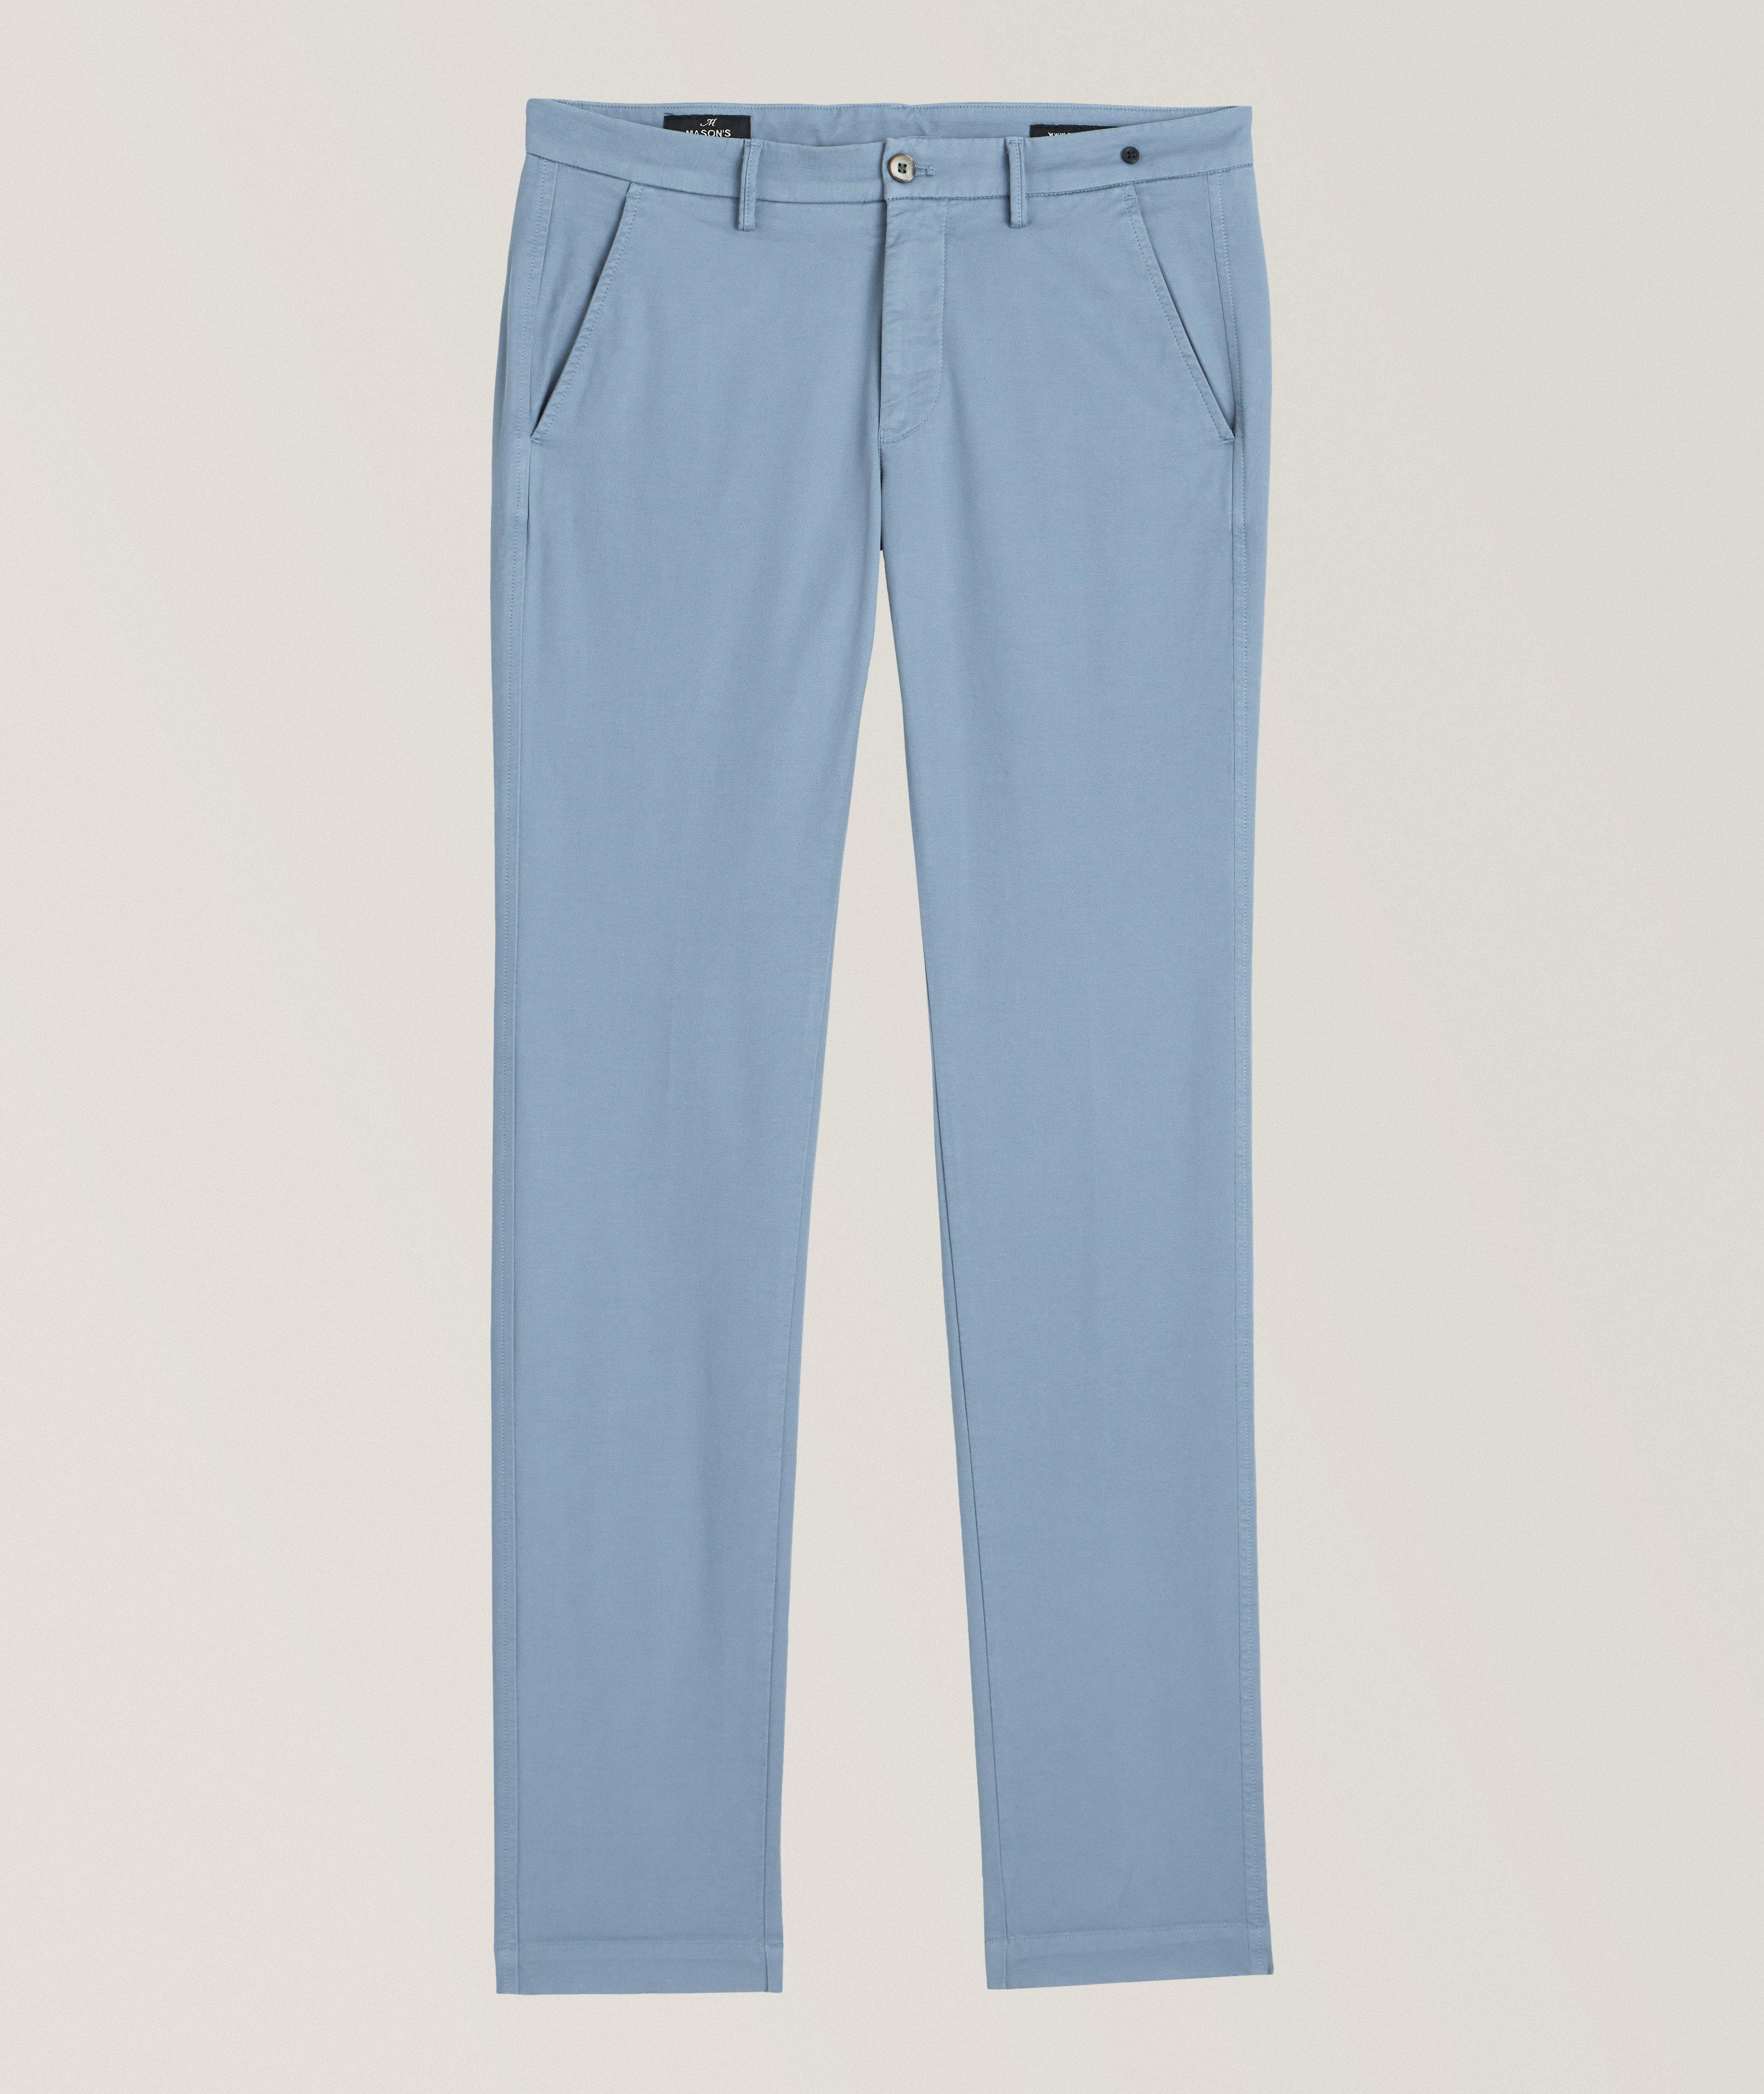 Mason's Slim-Fit Torino Pleated Jersey Stretch-Cotton Pants